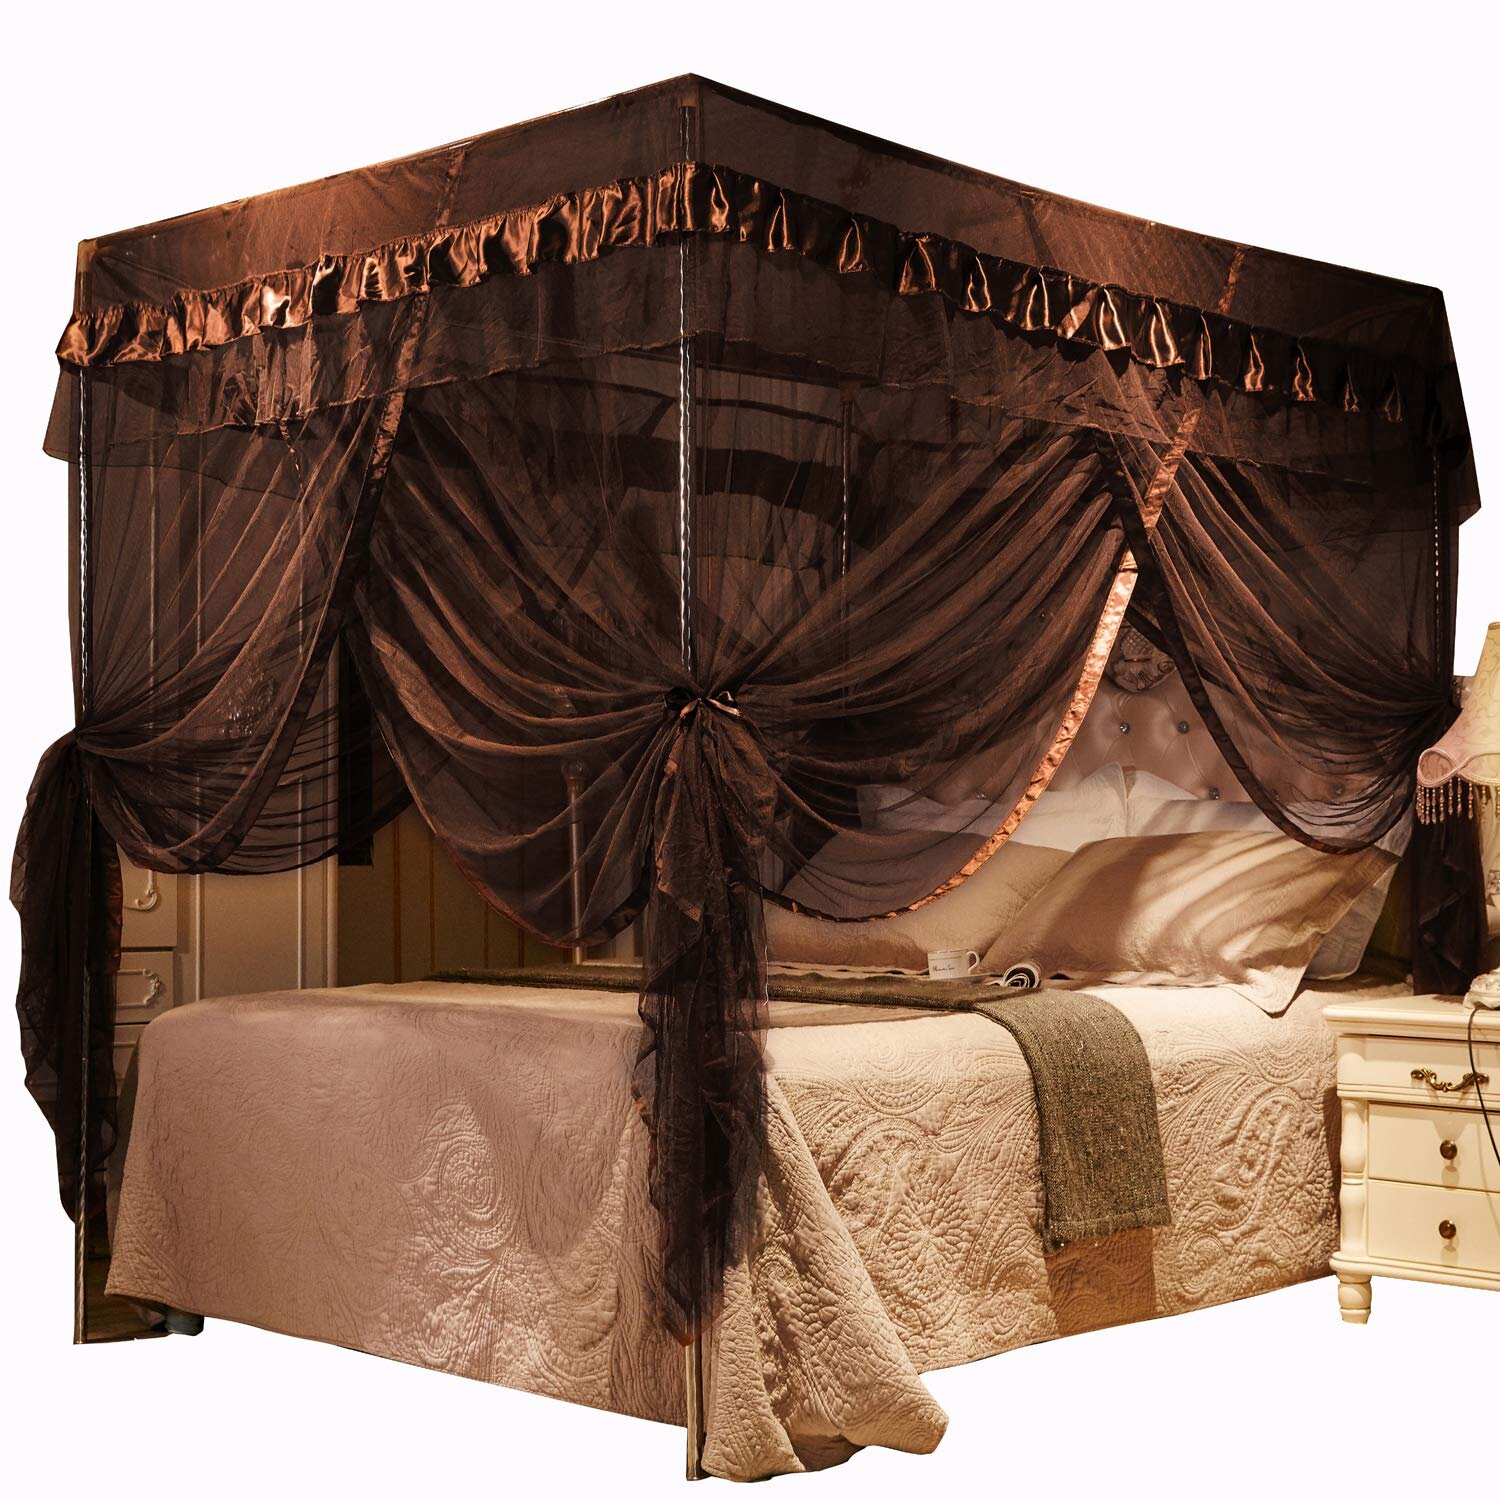 4 Corners Post Bed Curtain Canopy Canopies Bedroom Decoration (Queen, Coffee) Queen Coffee